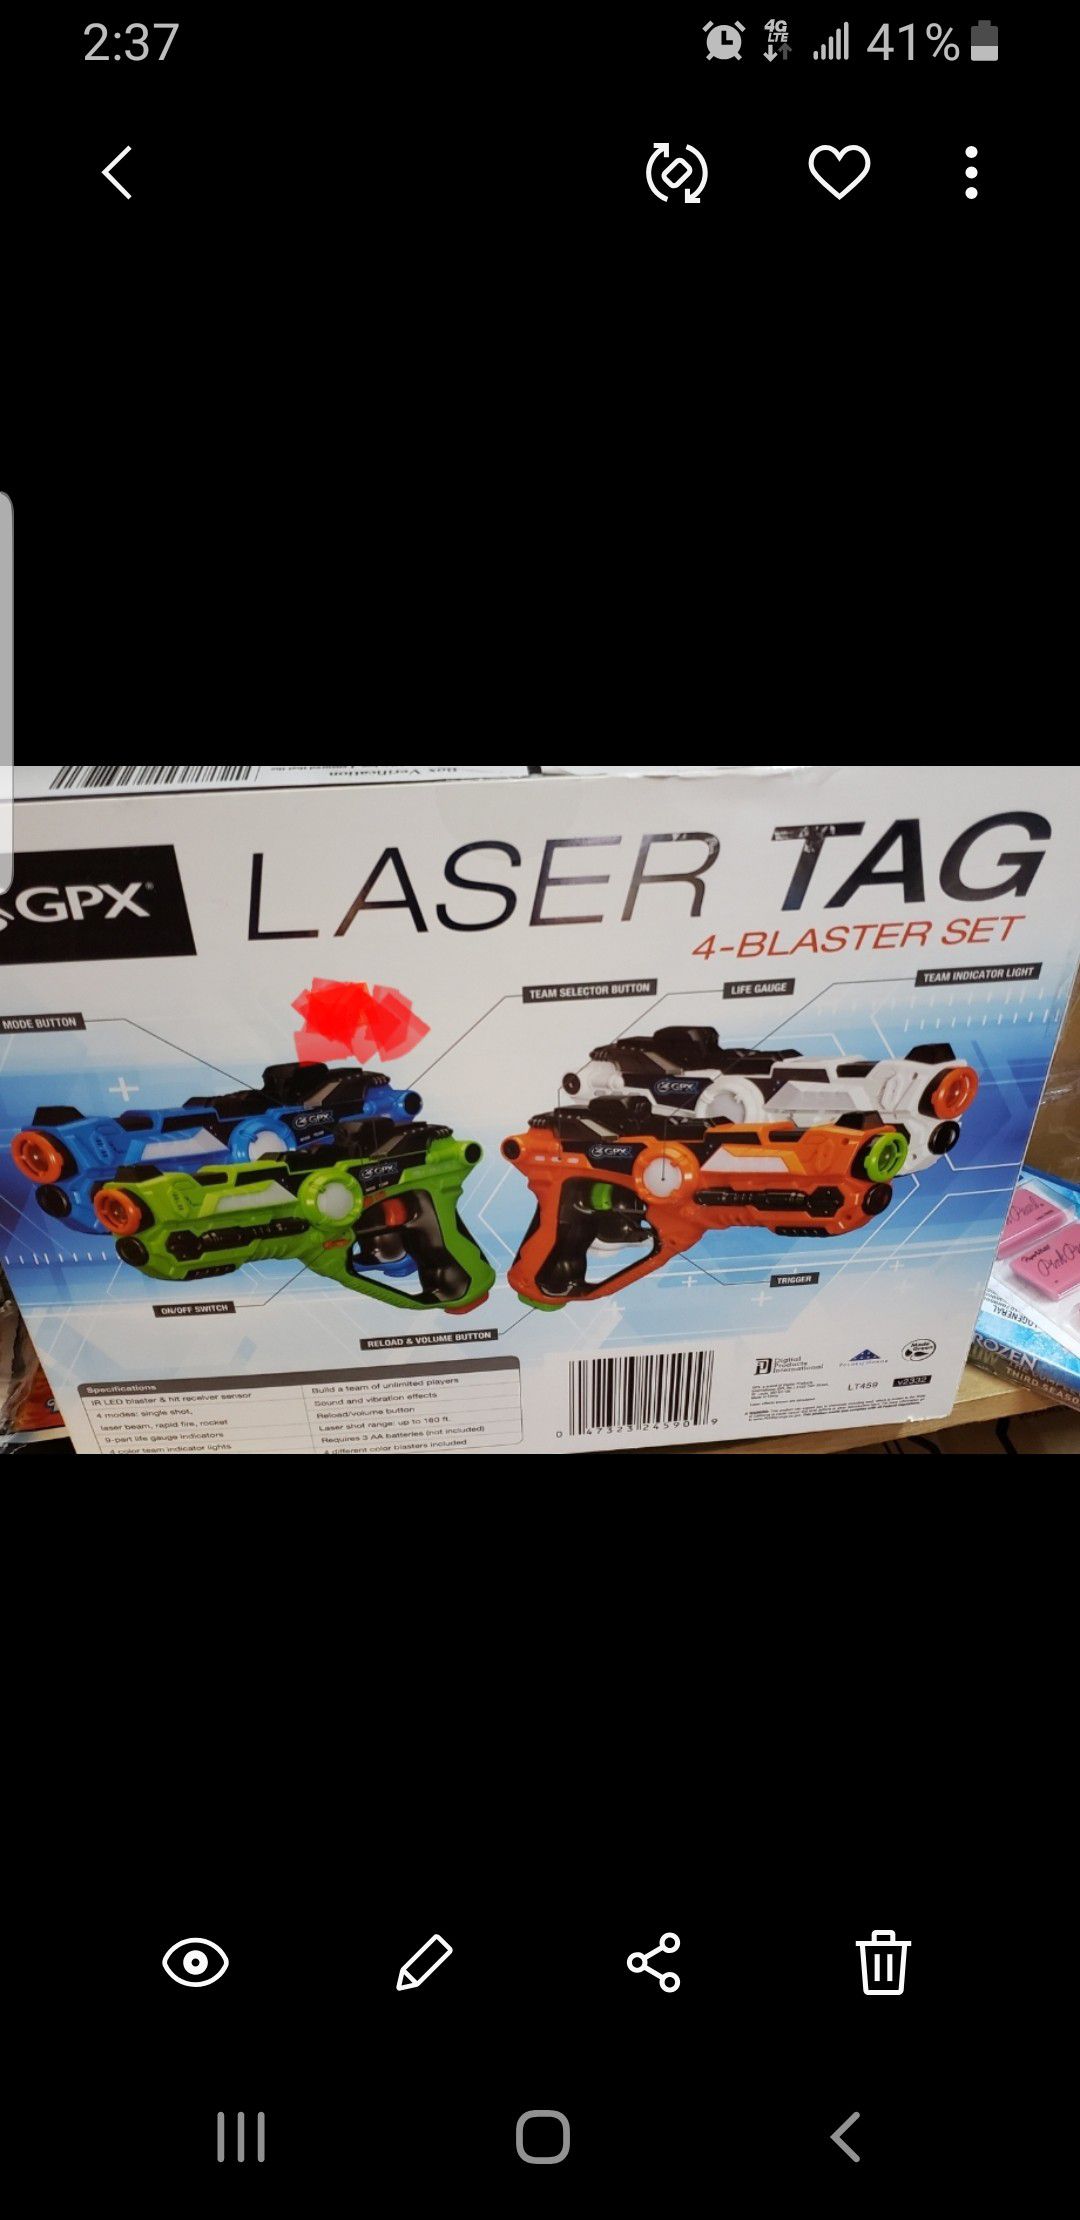 GPX Laser Tag 4 Blaster Set